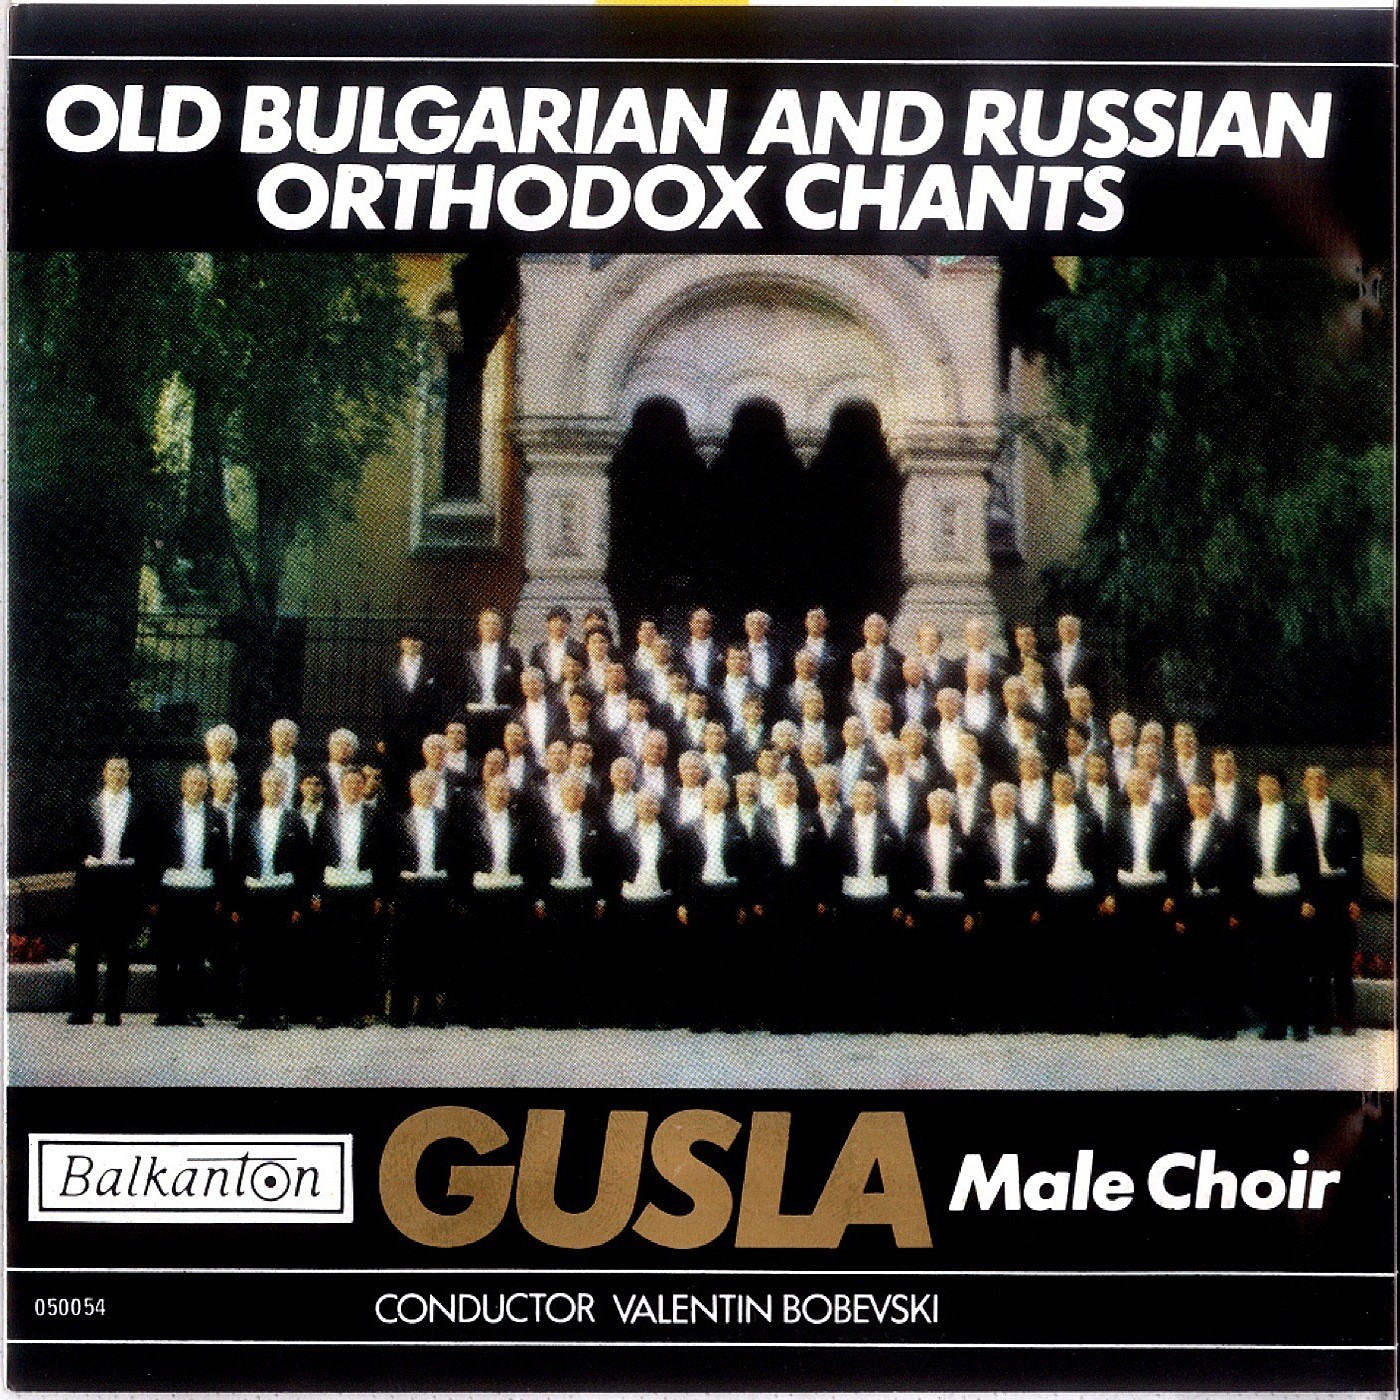 Male Choir "Gusla", cond. Valentin Bobevski. Old Bulgarian and Russian Orthodox Chants